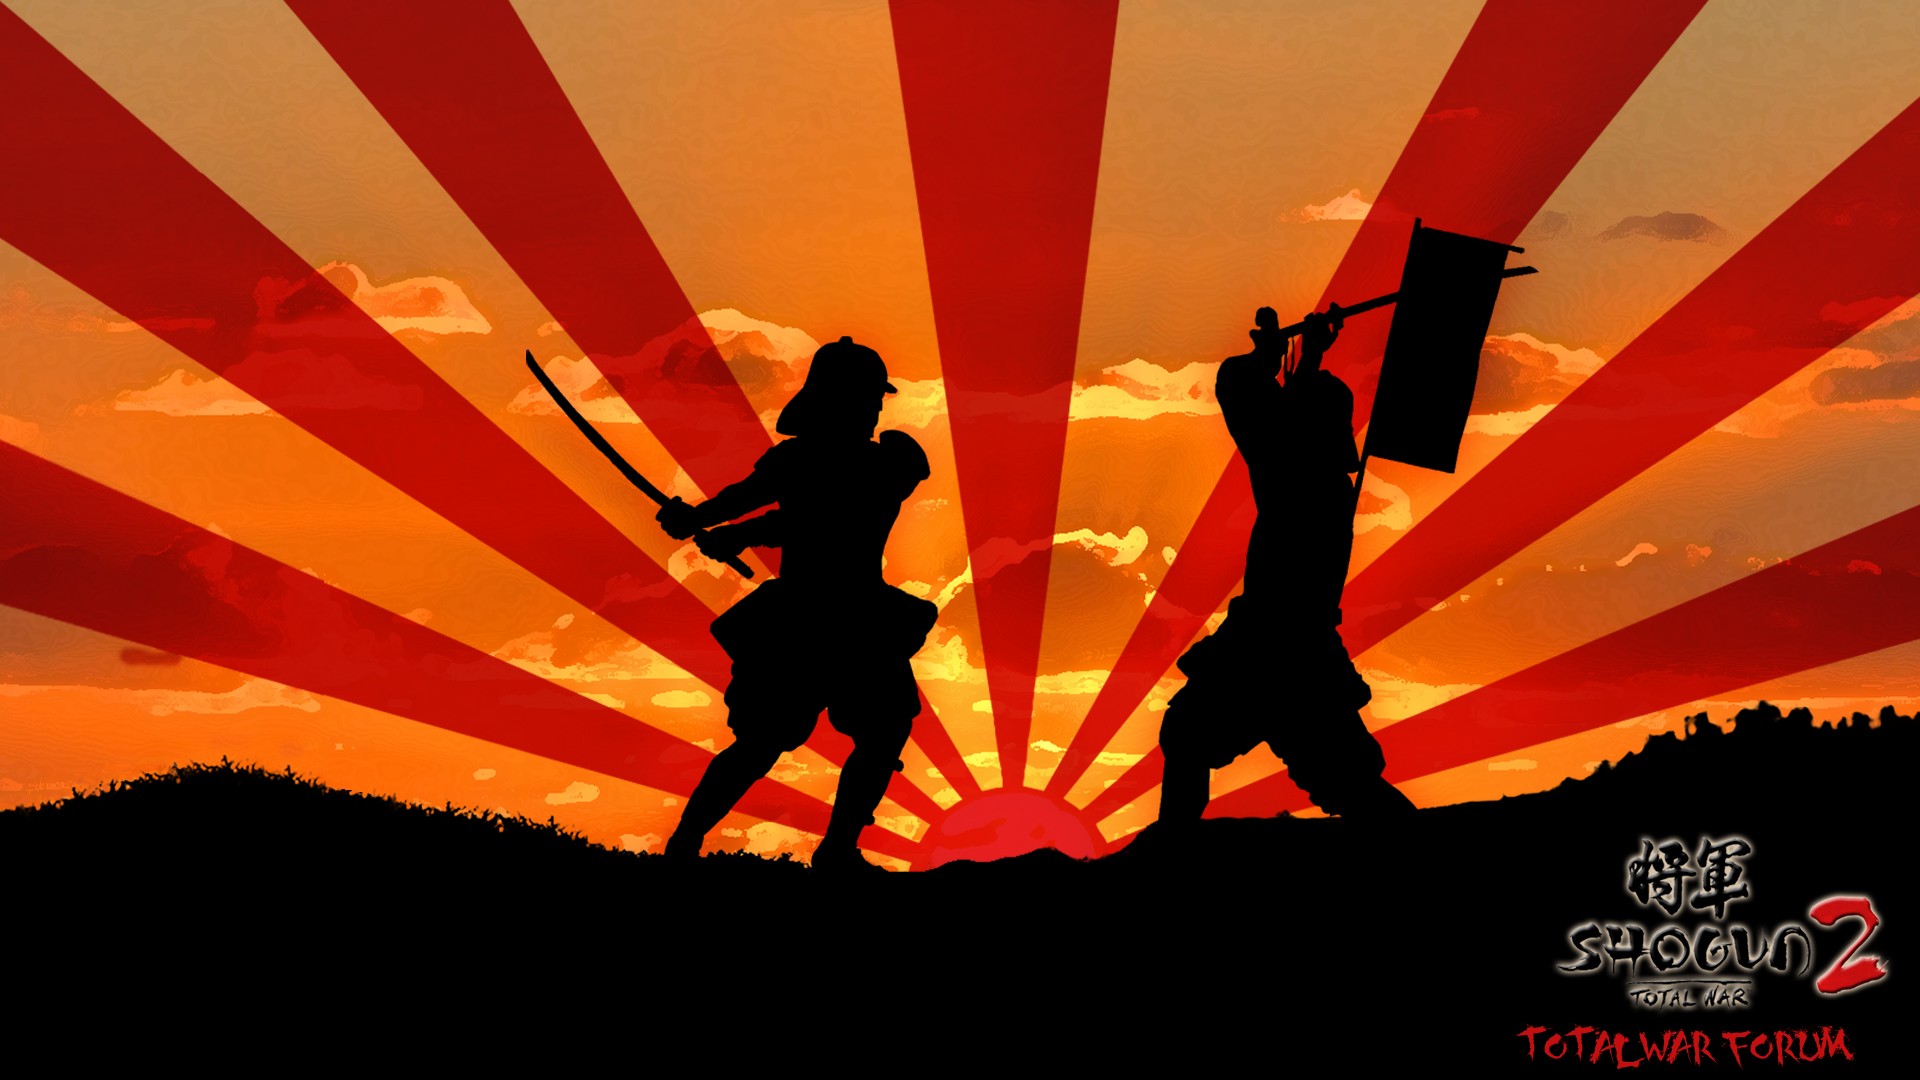 General 1920x1080 Total War: Shogun 2 Japan samurai silhouette video games warrior PC gaming video game art